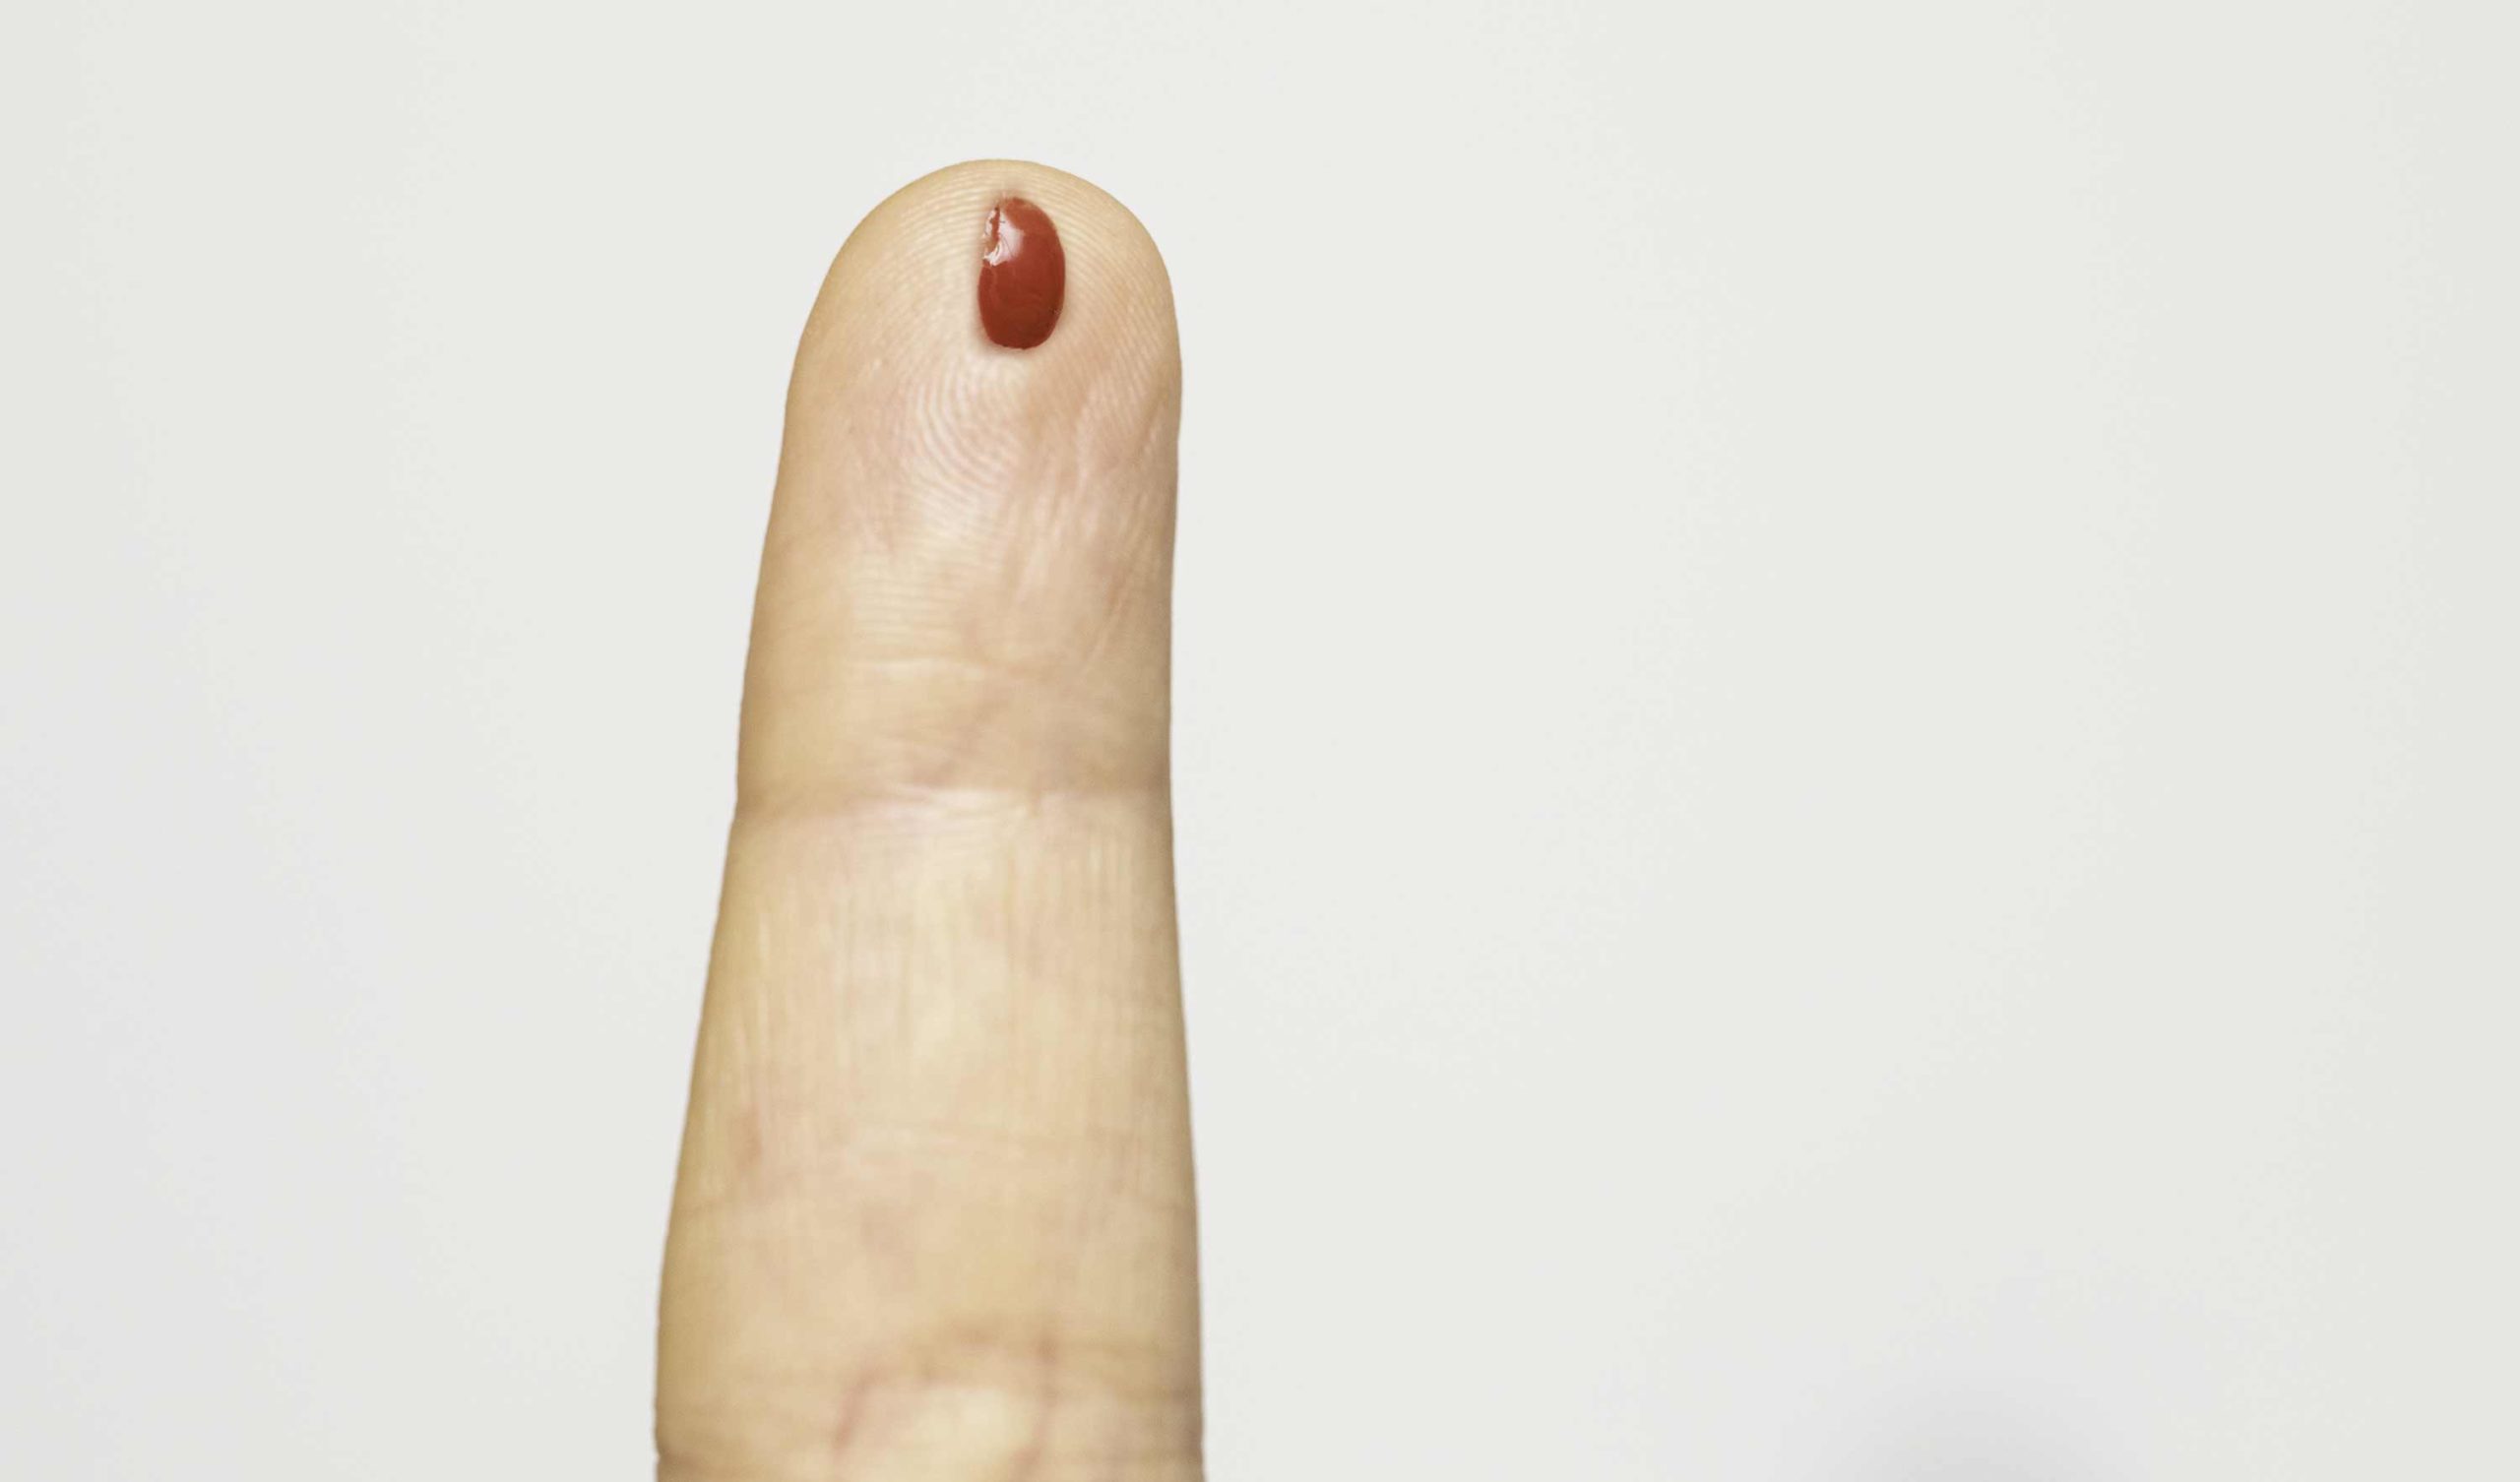 small finger prick blood test